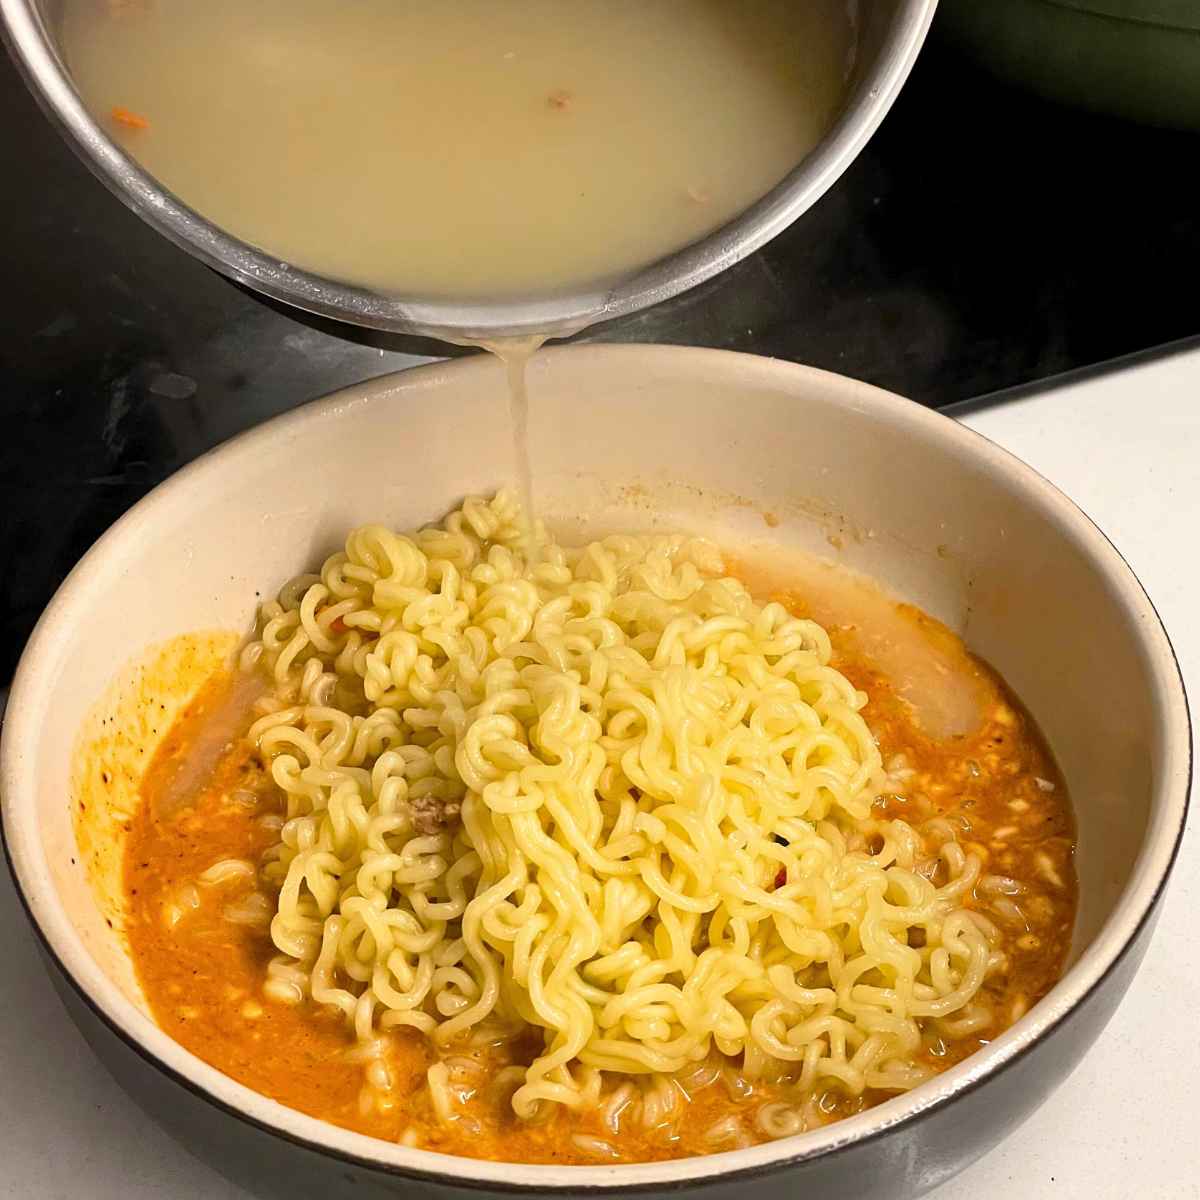 Add noodle water to make creamy ramen noodles